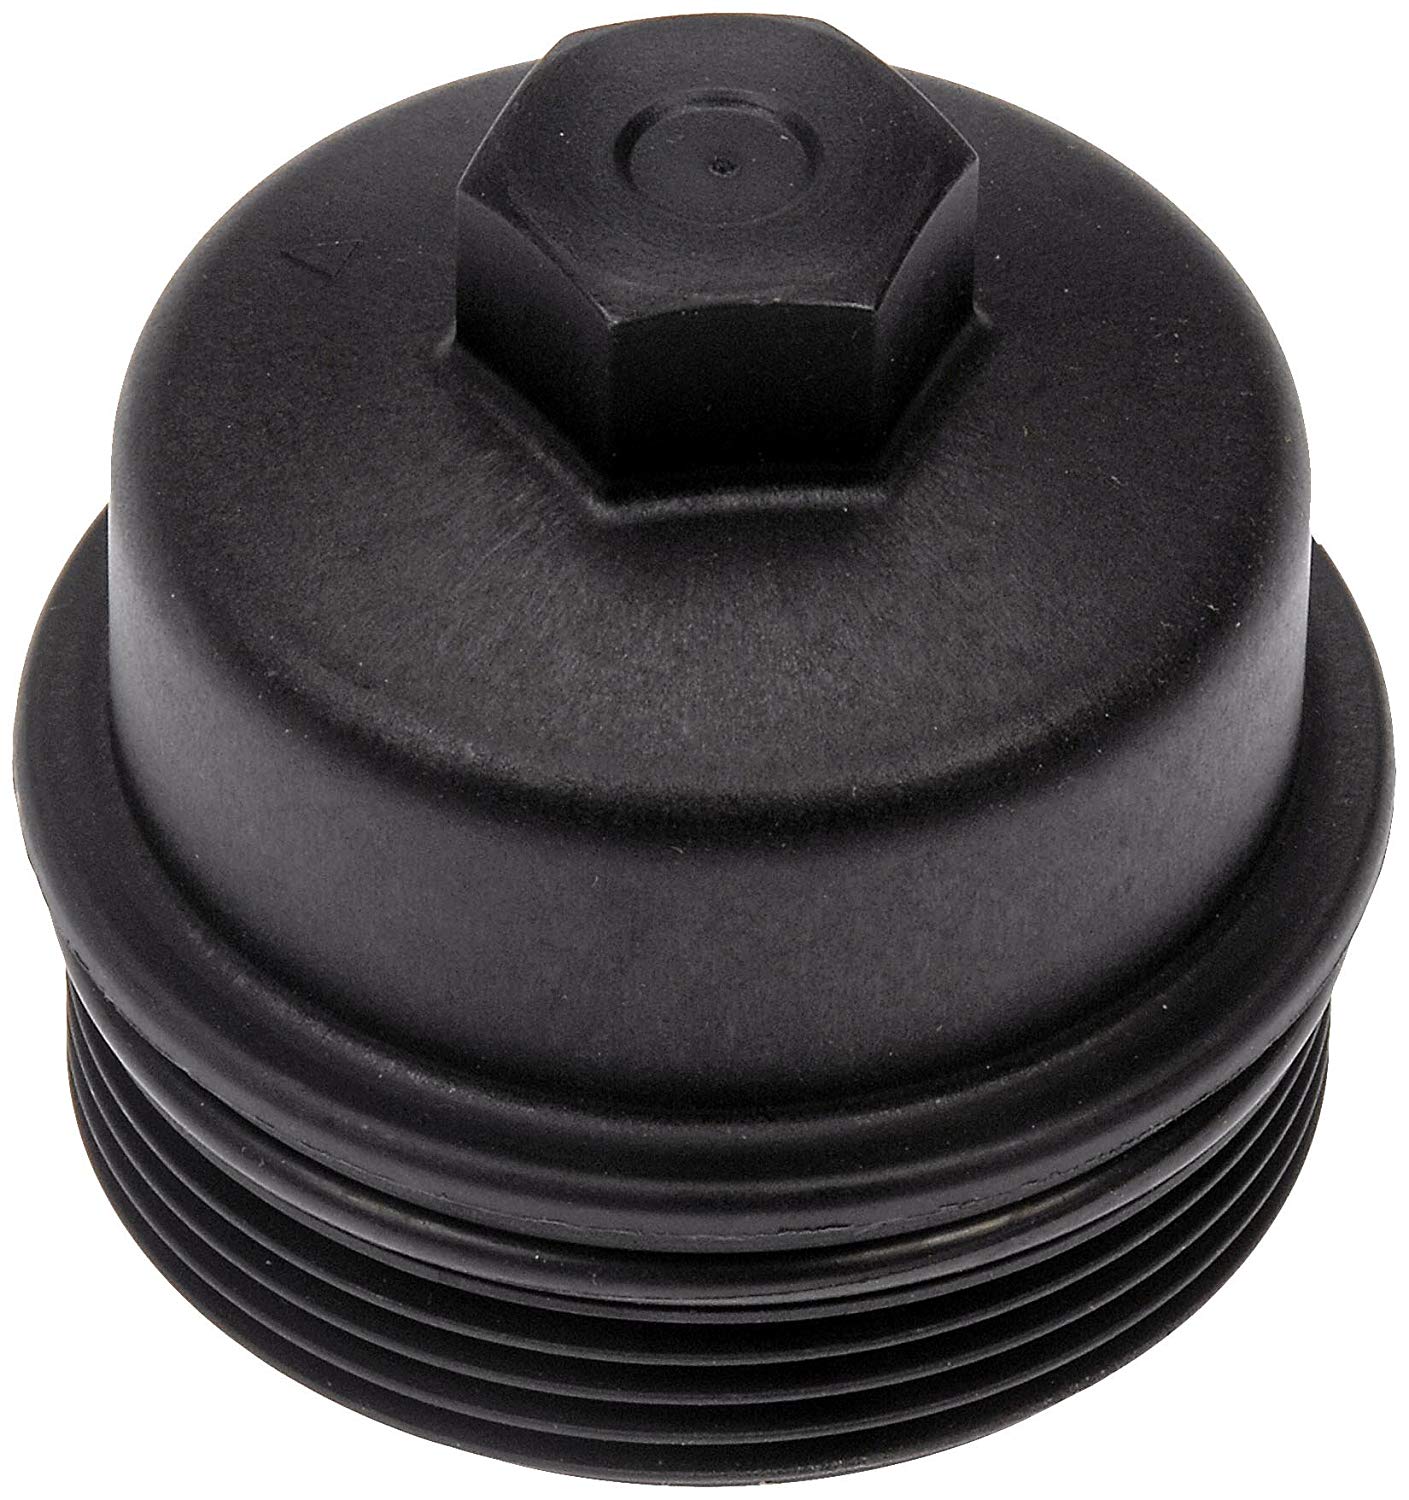 Dorman 917-051 Oil Filter Cap